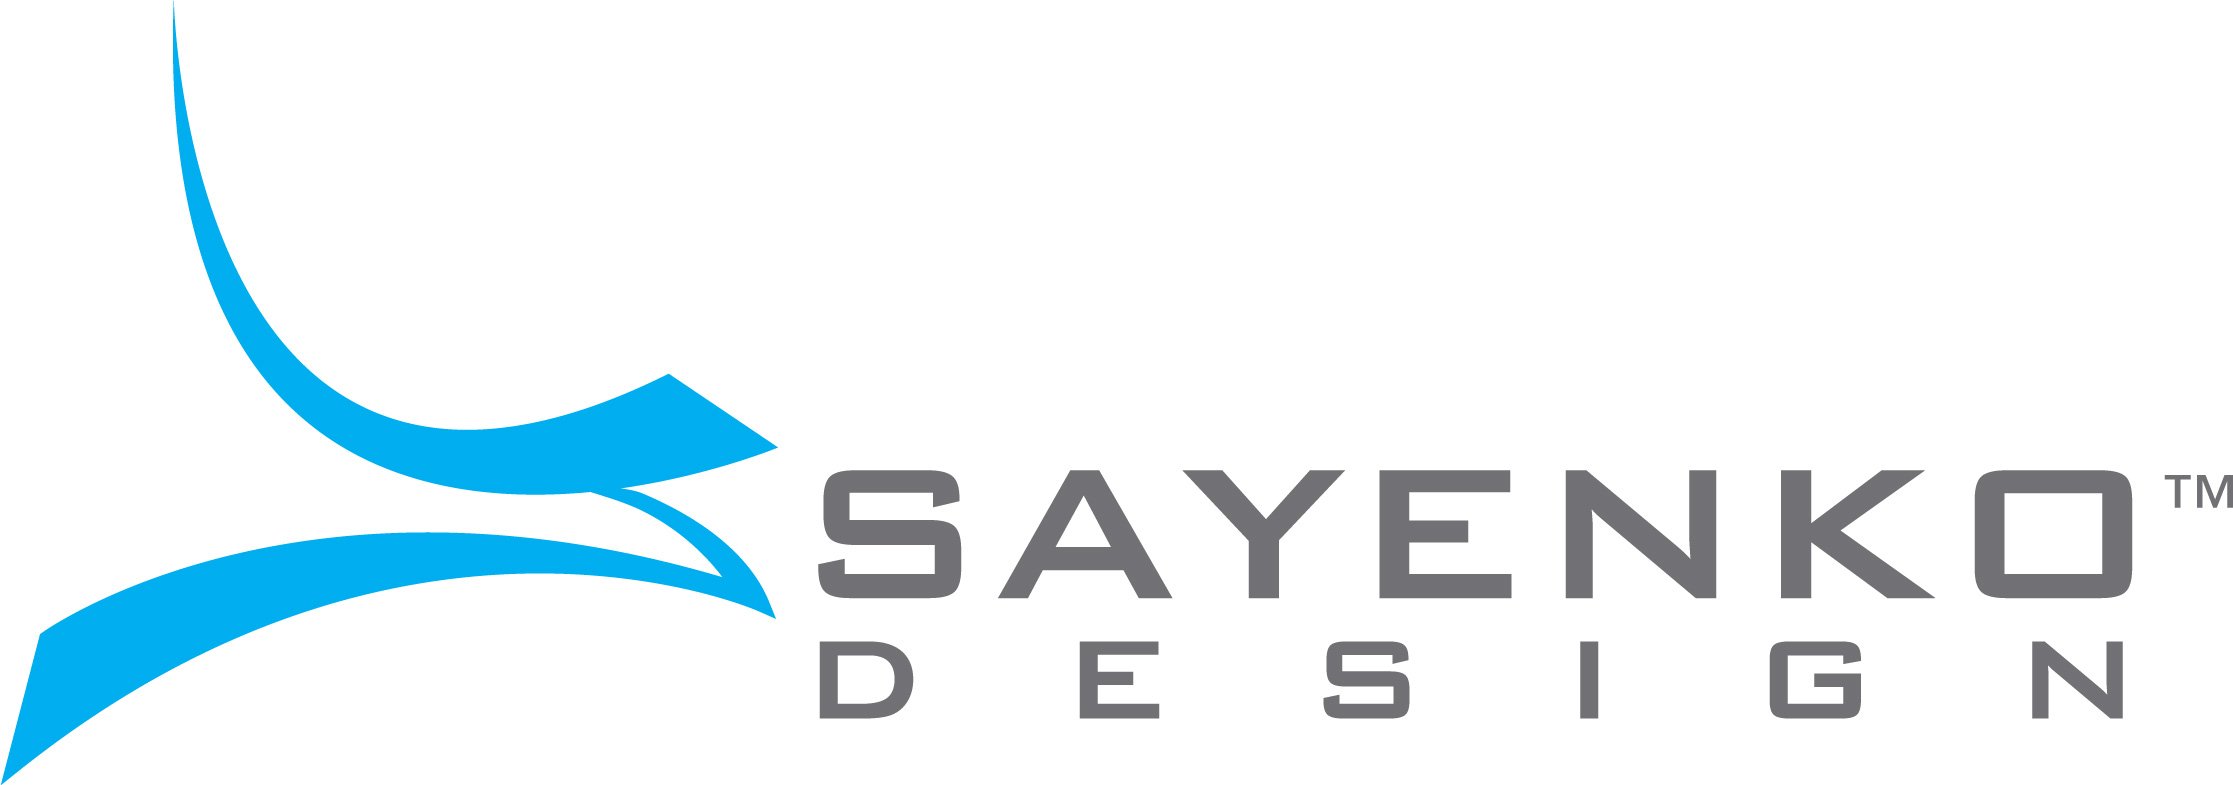 Best Web Design Firm Logo: Sayenko Design